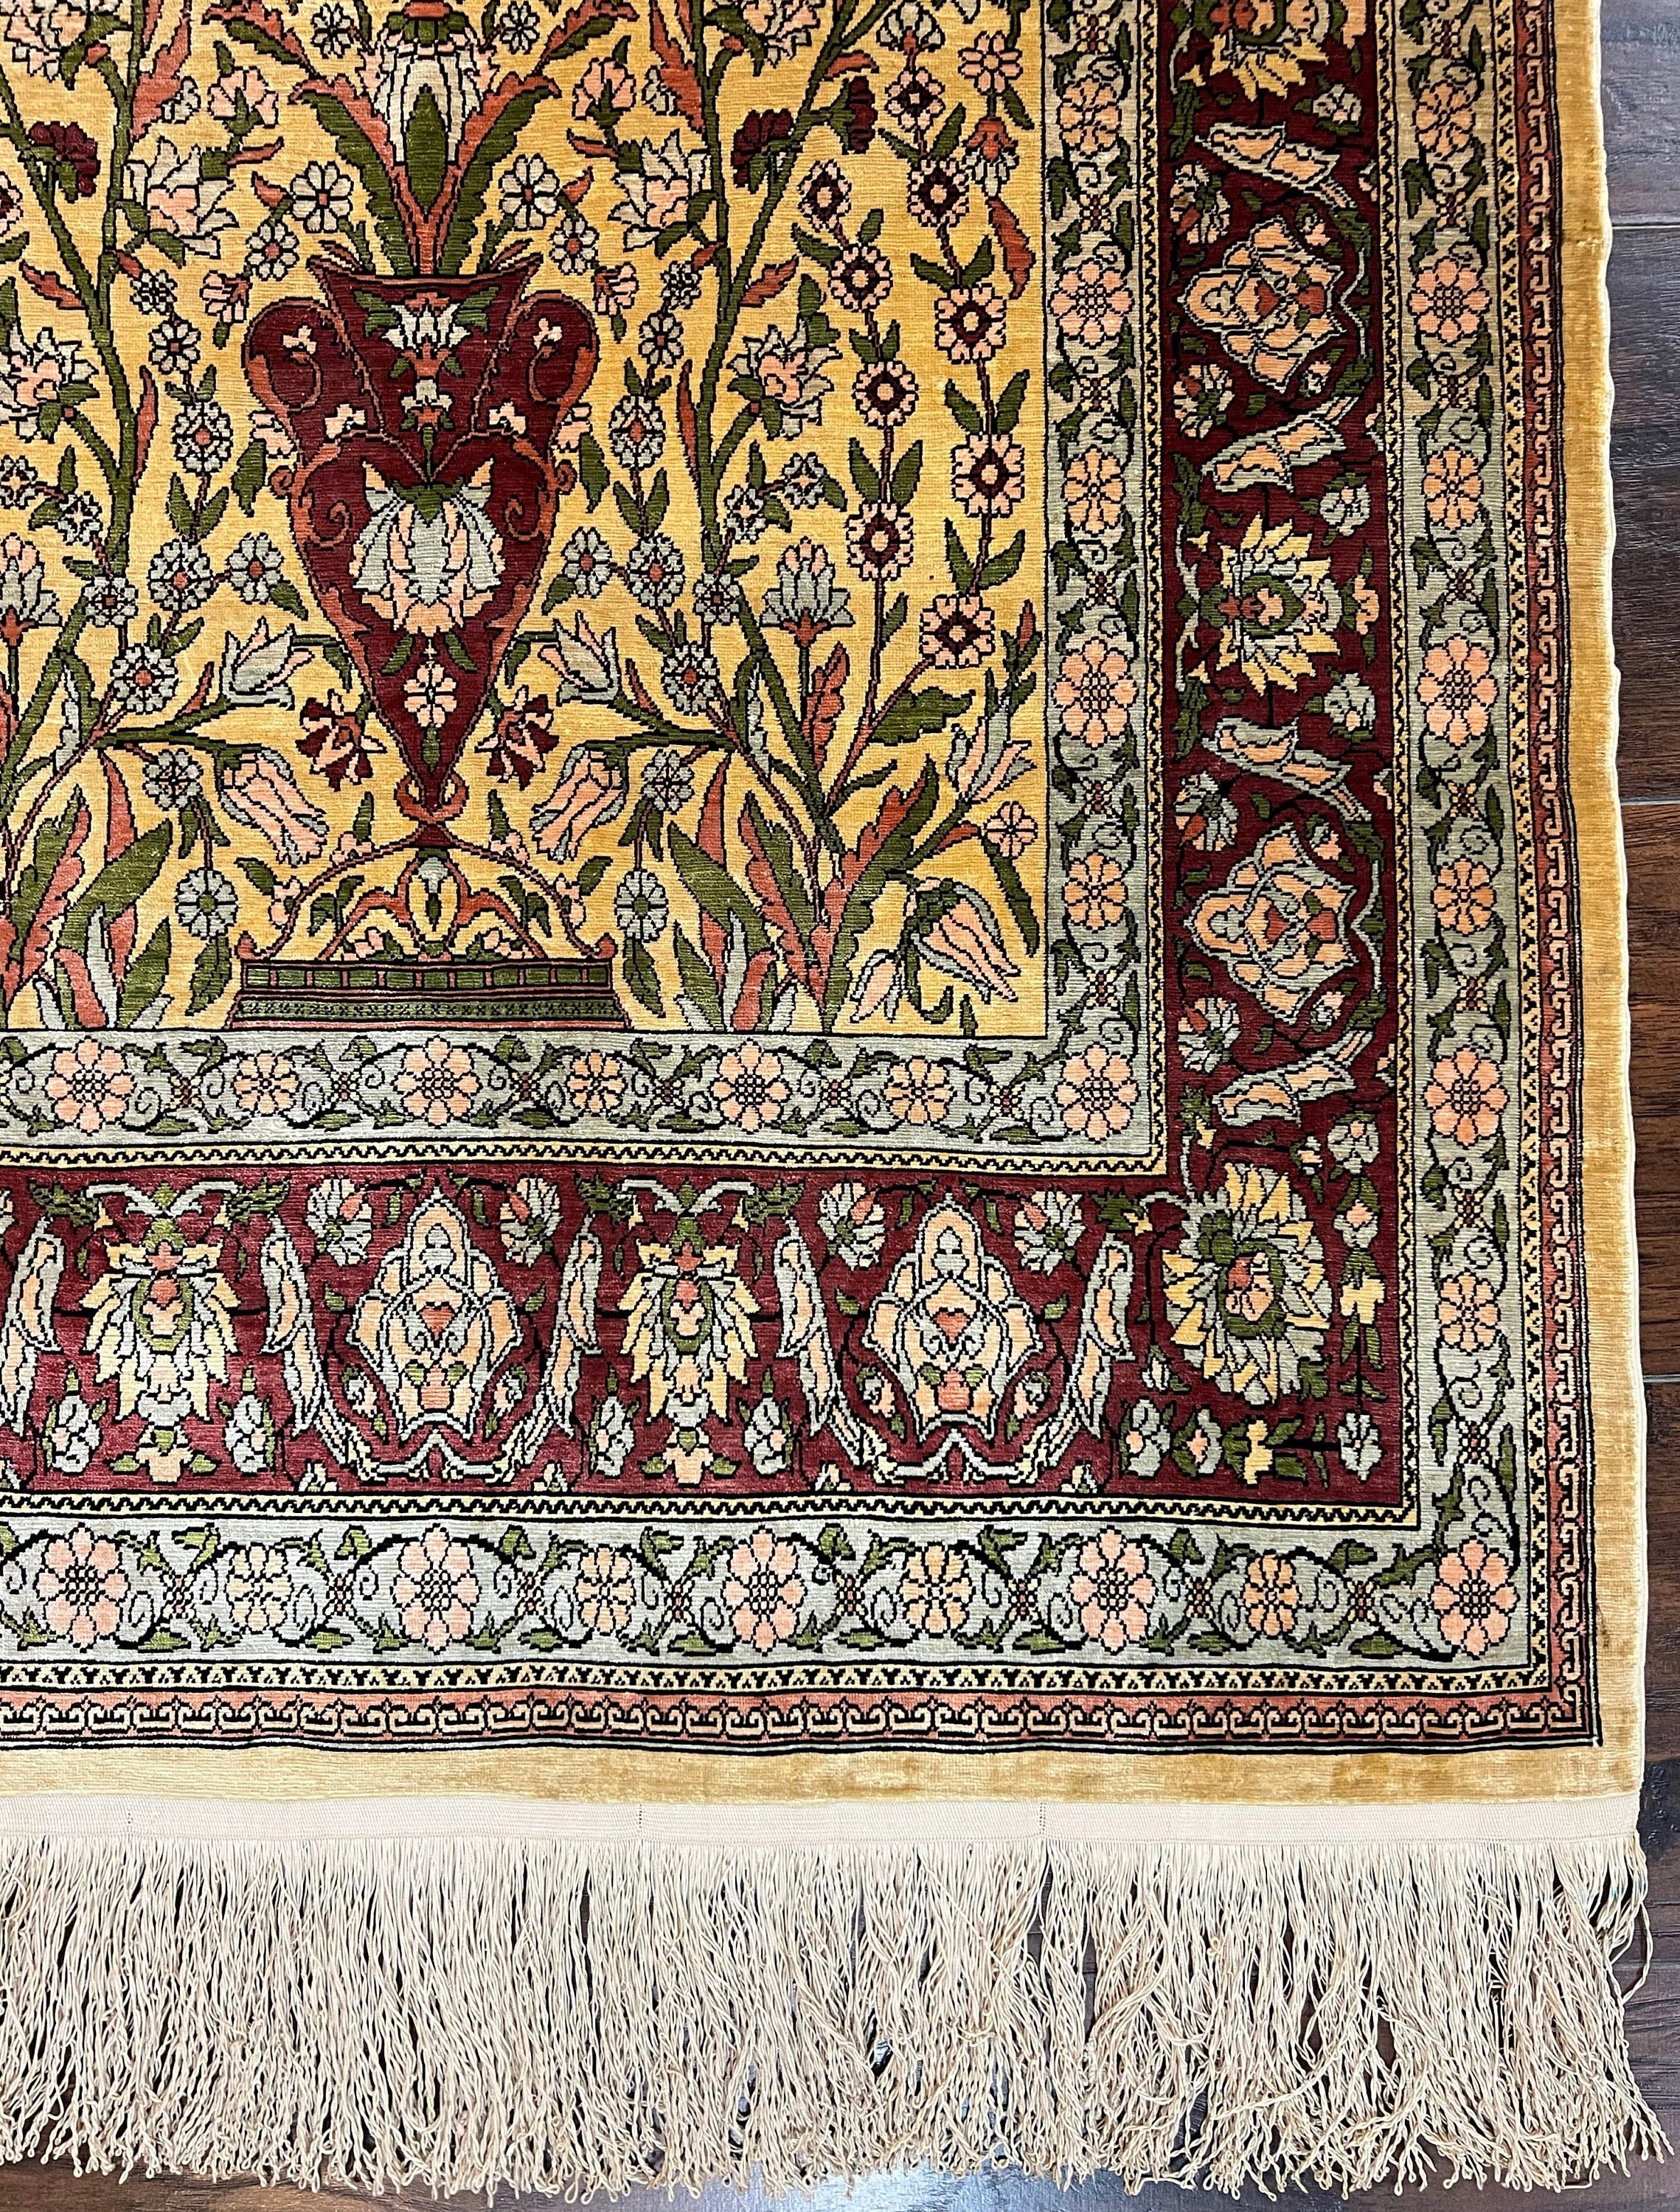 Jay Ahr Pristine, Birkin 30cm, Persian Rug, Turquoise, Leather